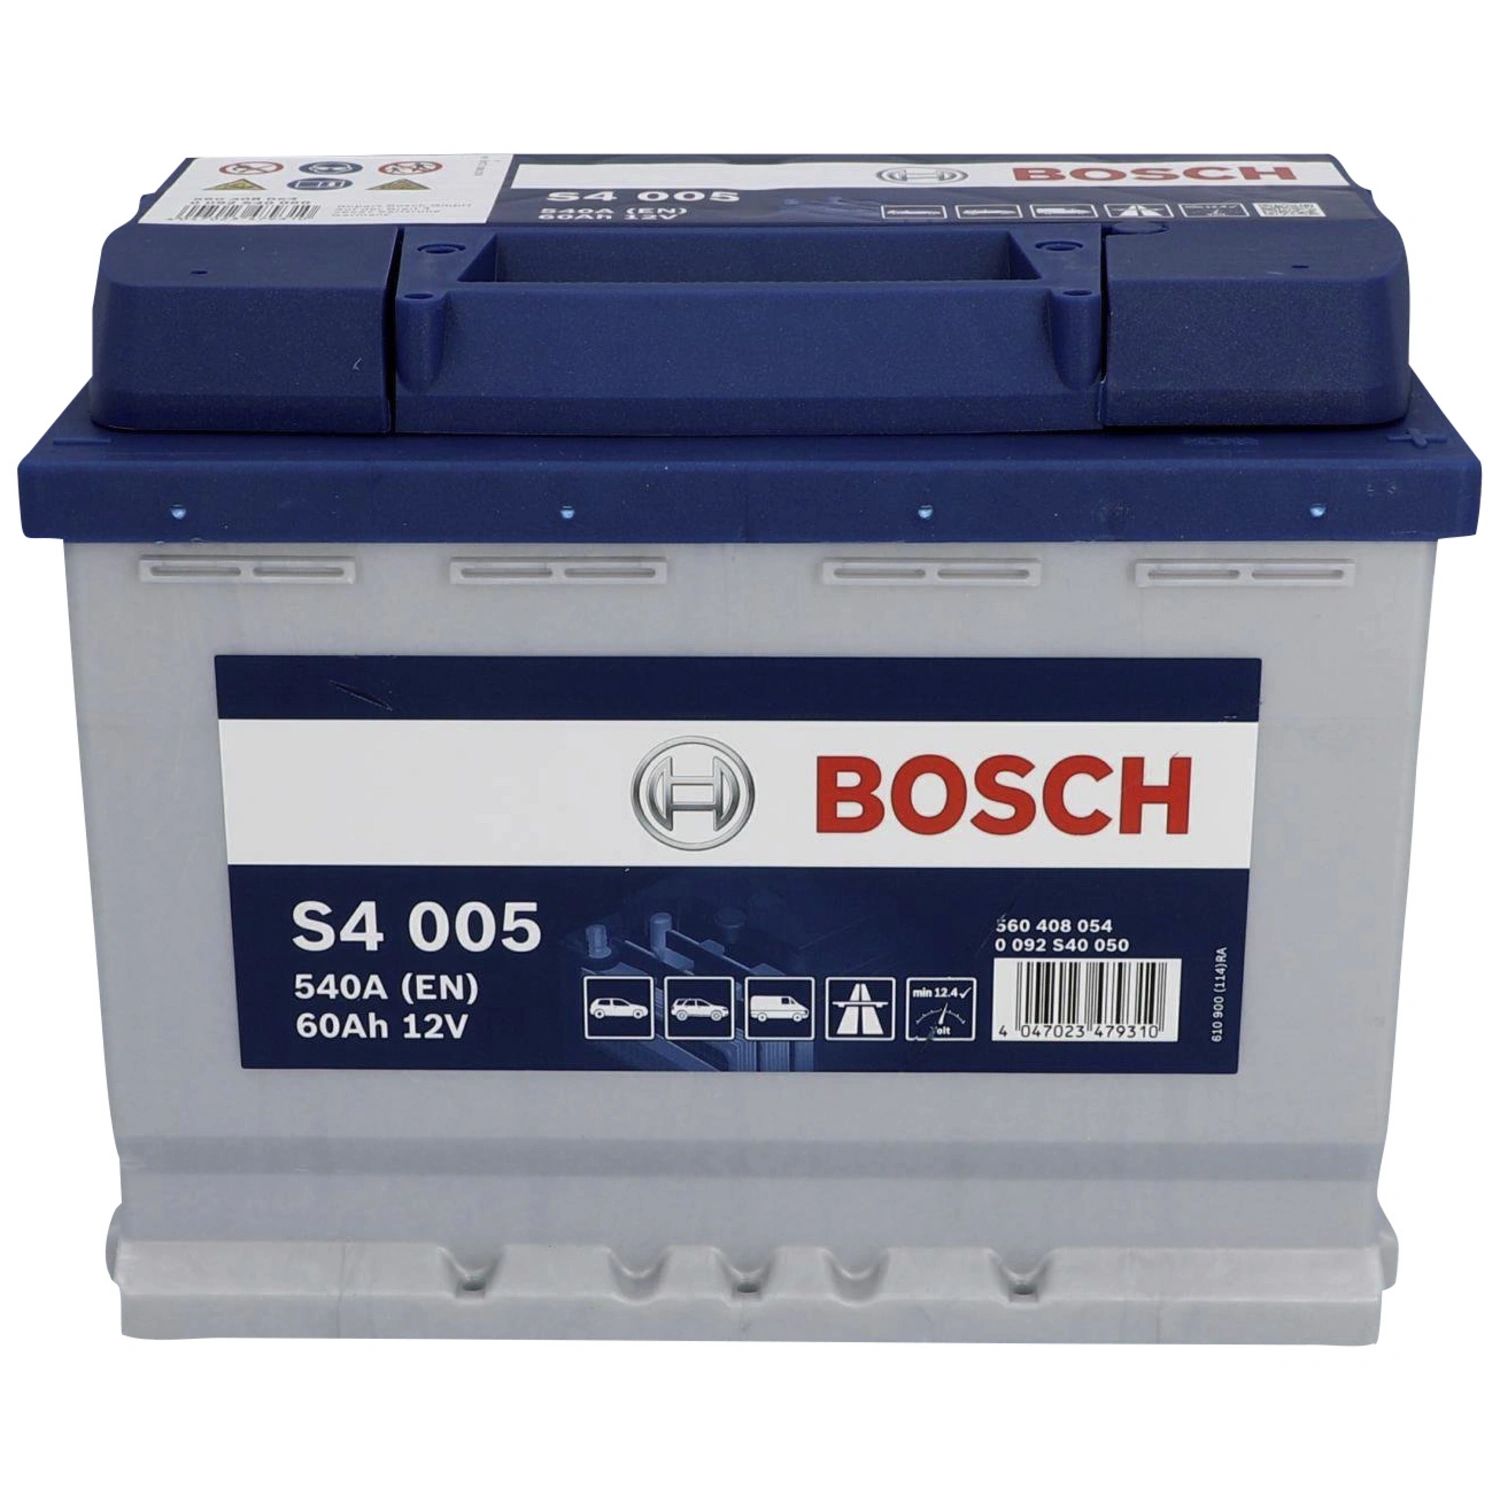 BOSCH Starterbatterie, BOSCH silver, 12V 60 Ah A540 S4 KSN S4 005 